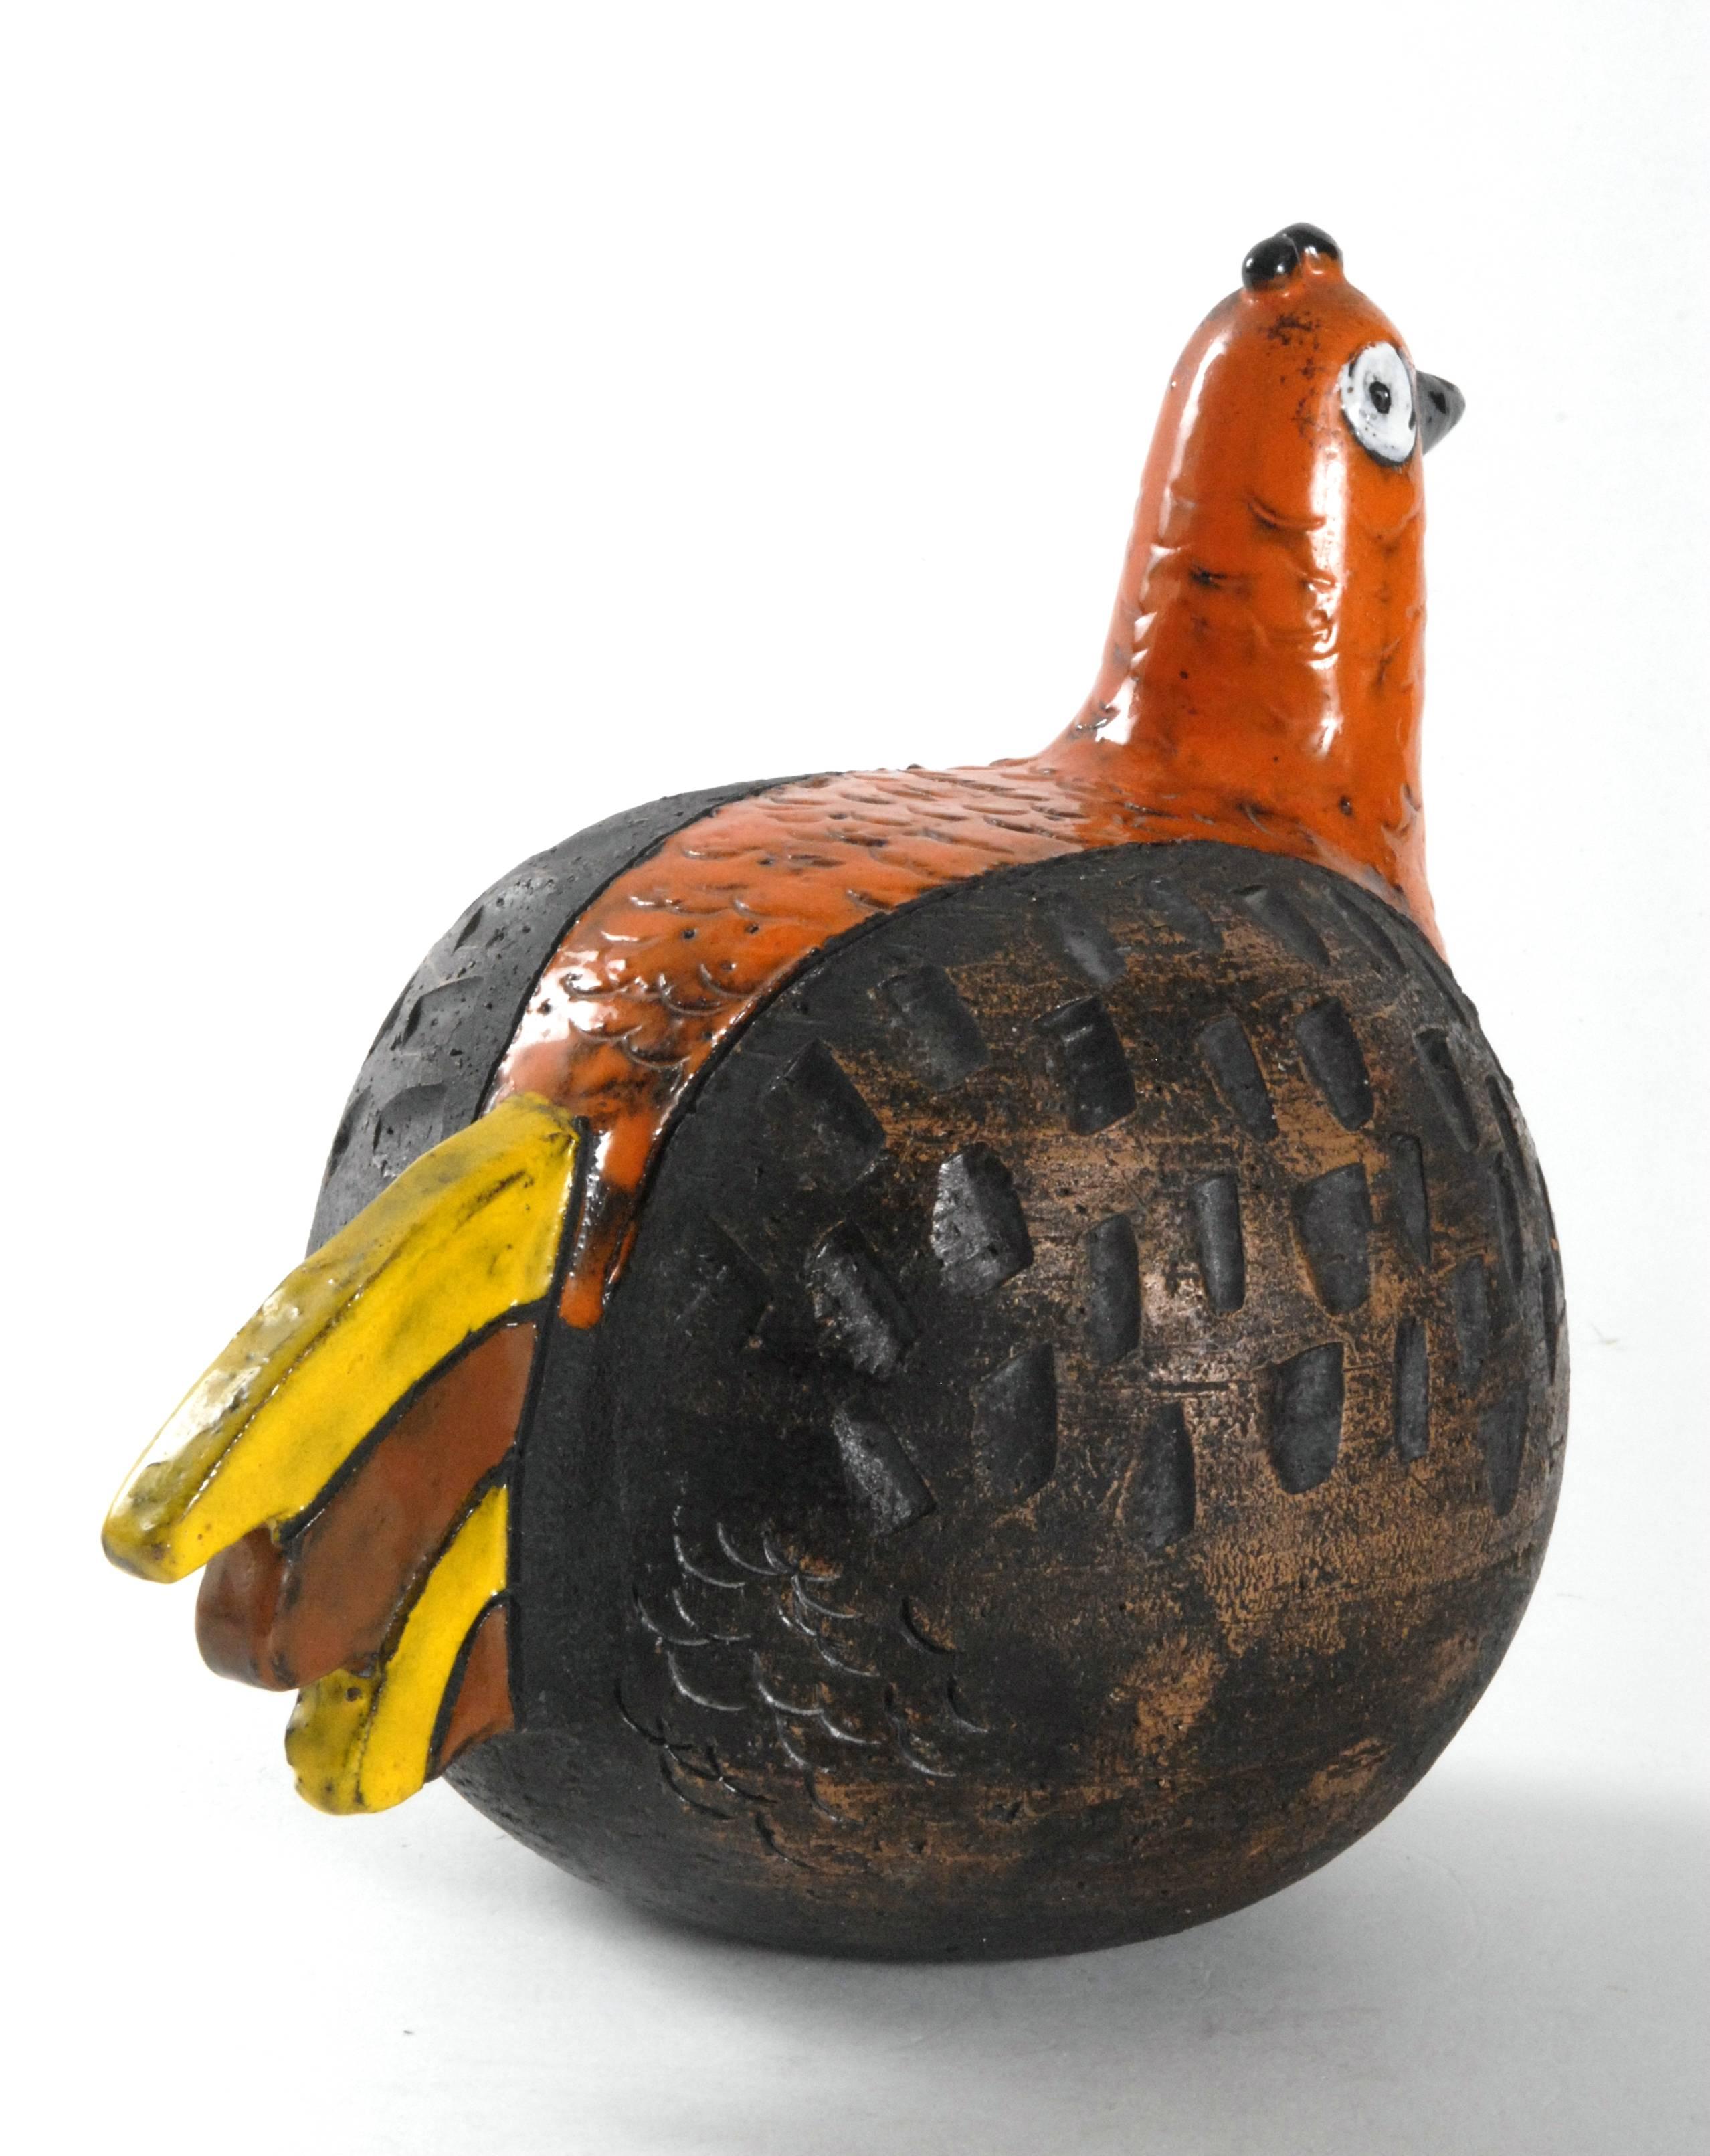 Hand-Crafted Bitossi Aldo Londi Bird in Brown and Orange, Italy, circa 1968